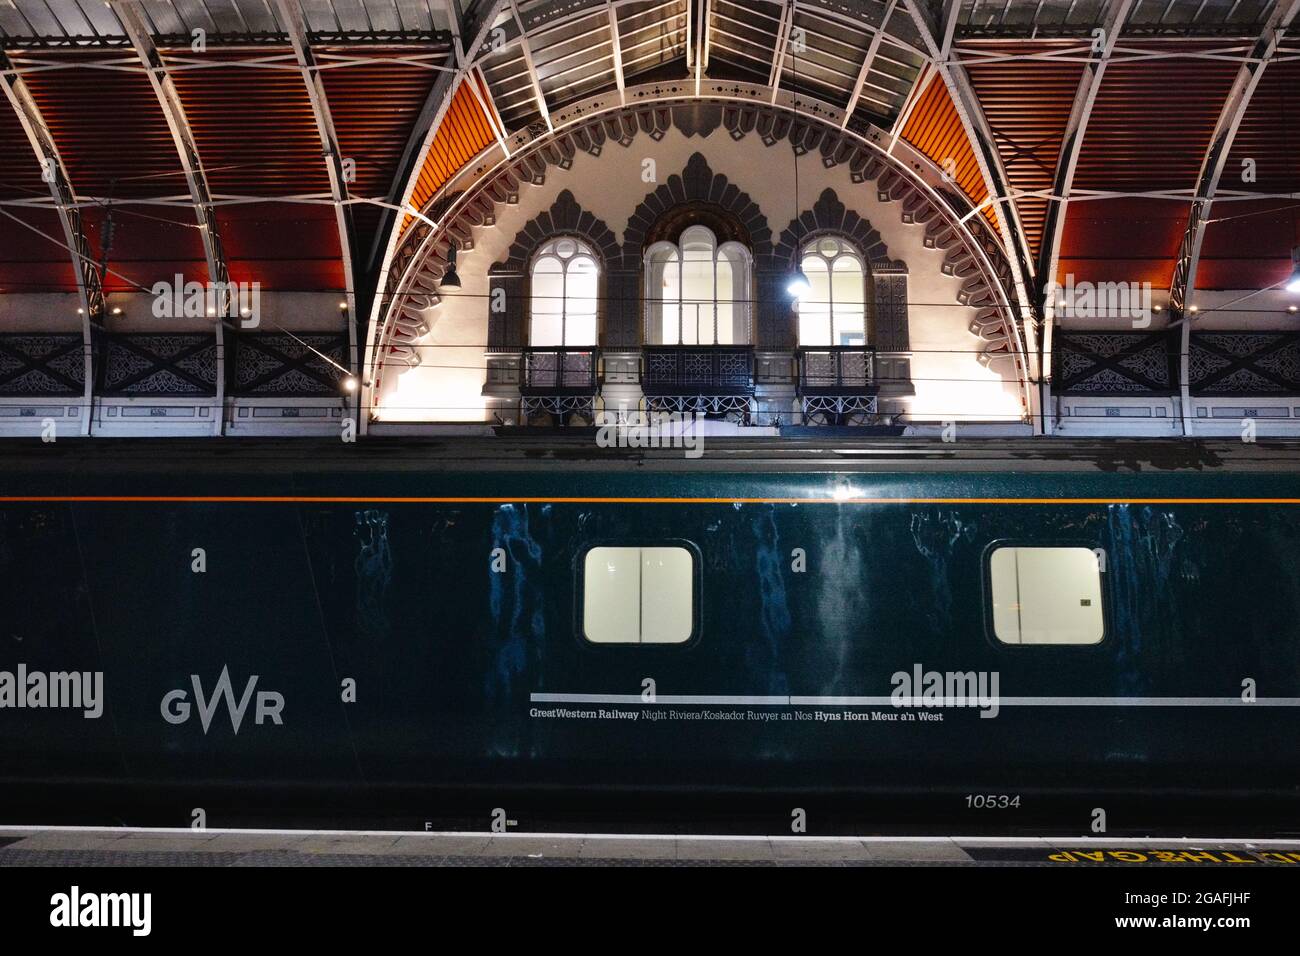 Night Riviera sleeper train (London to Penzance, Cornwall), Great Western Railway, Paddington station, England, UK, July 2021 Stock Photo